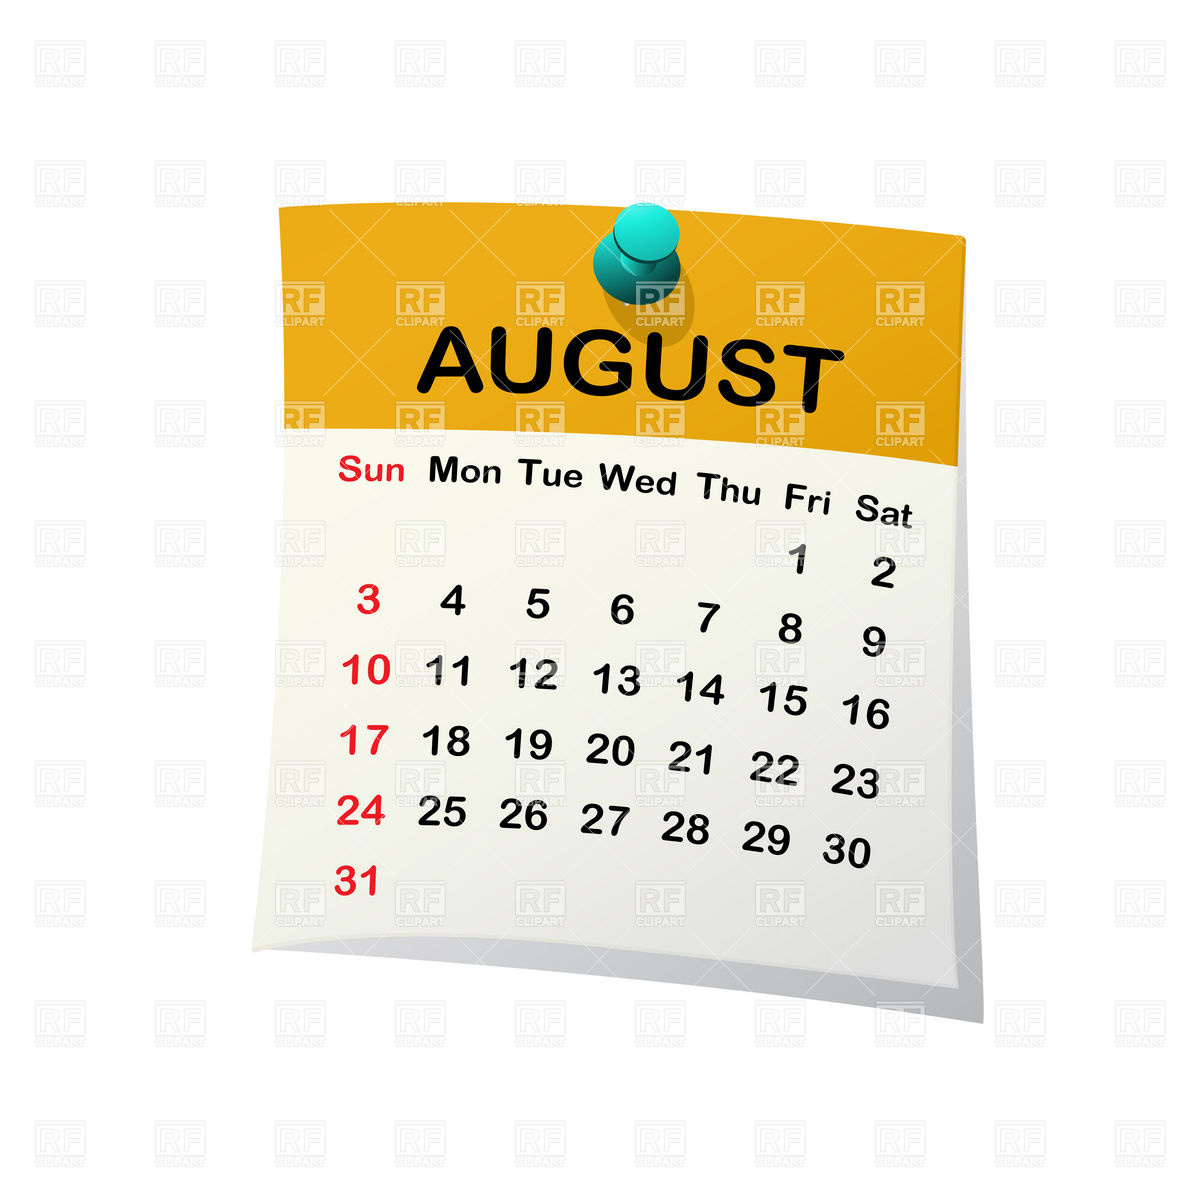 August 2014 Month Calendar 20541 Design Elements Download Royalty    